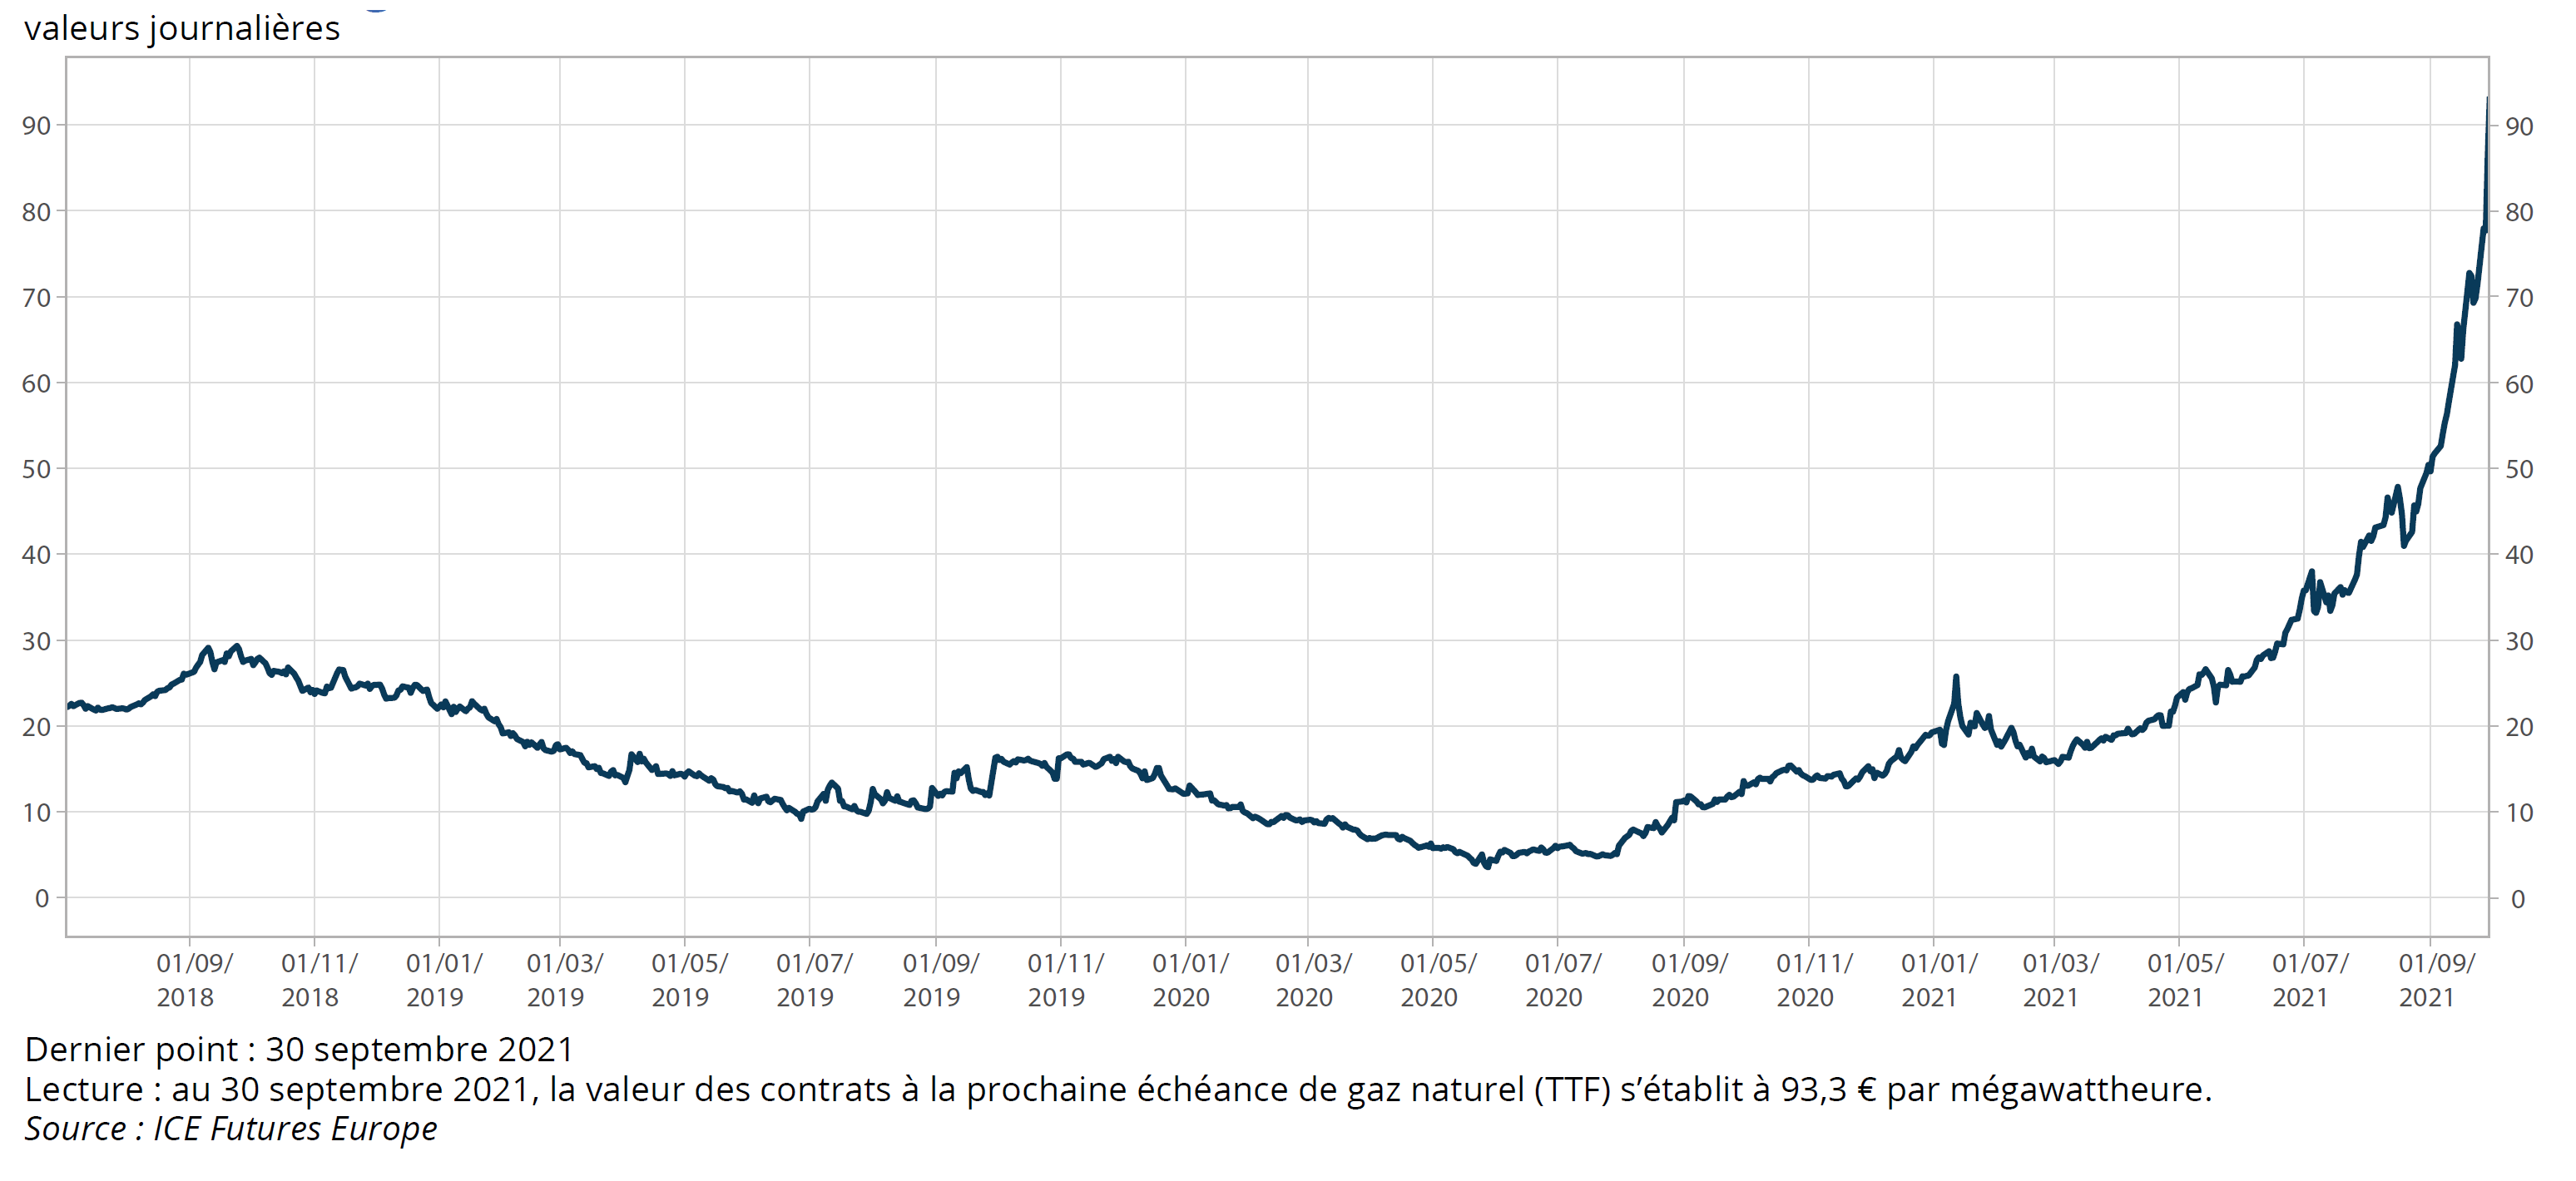 Cours du gaz naturel en euros